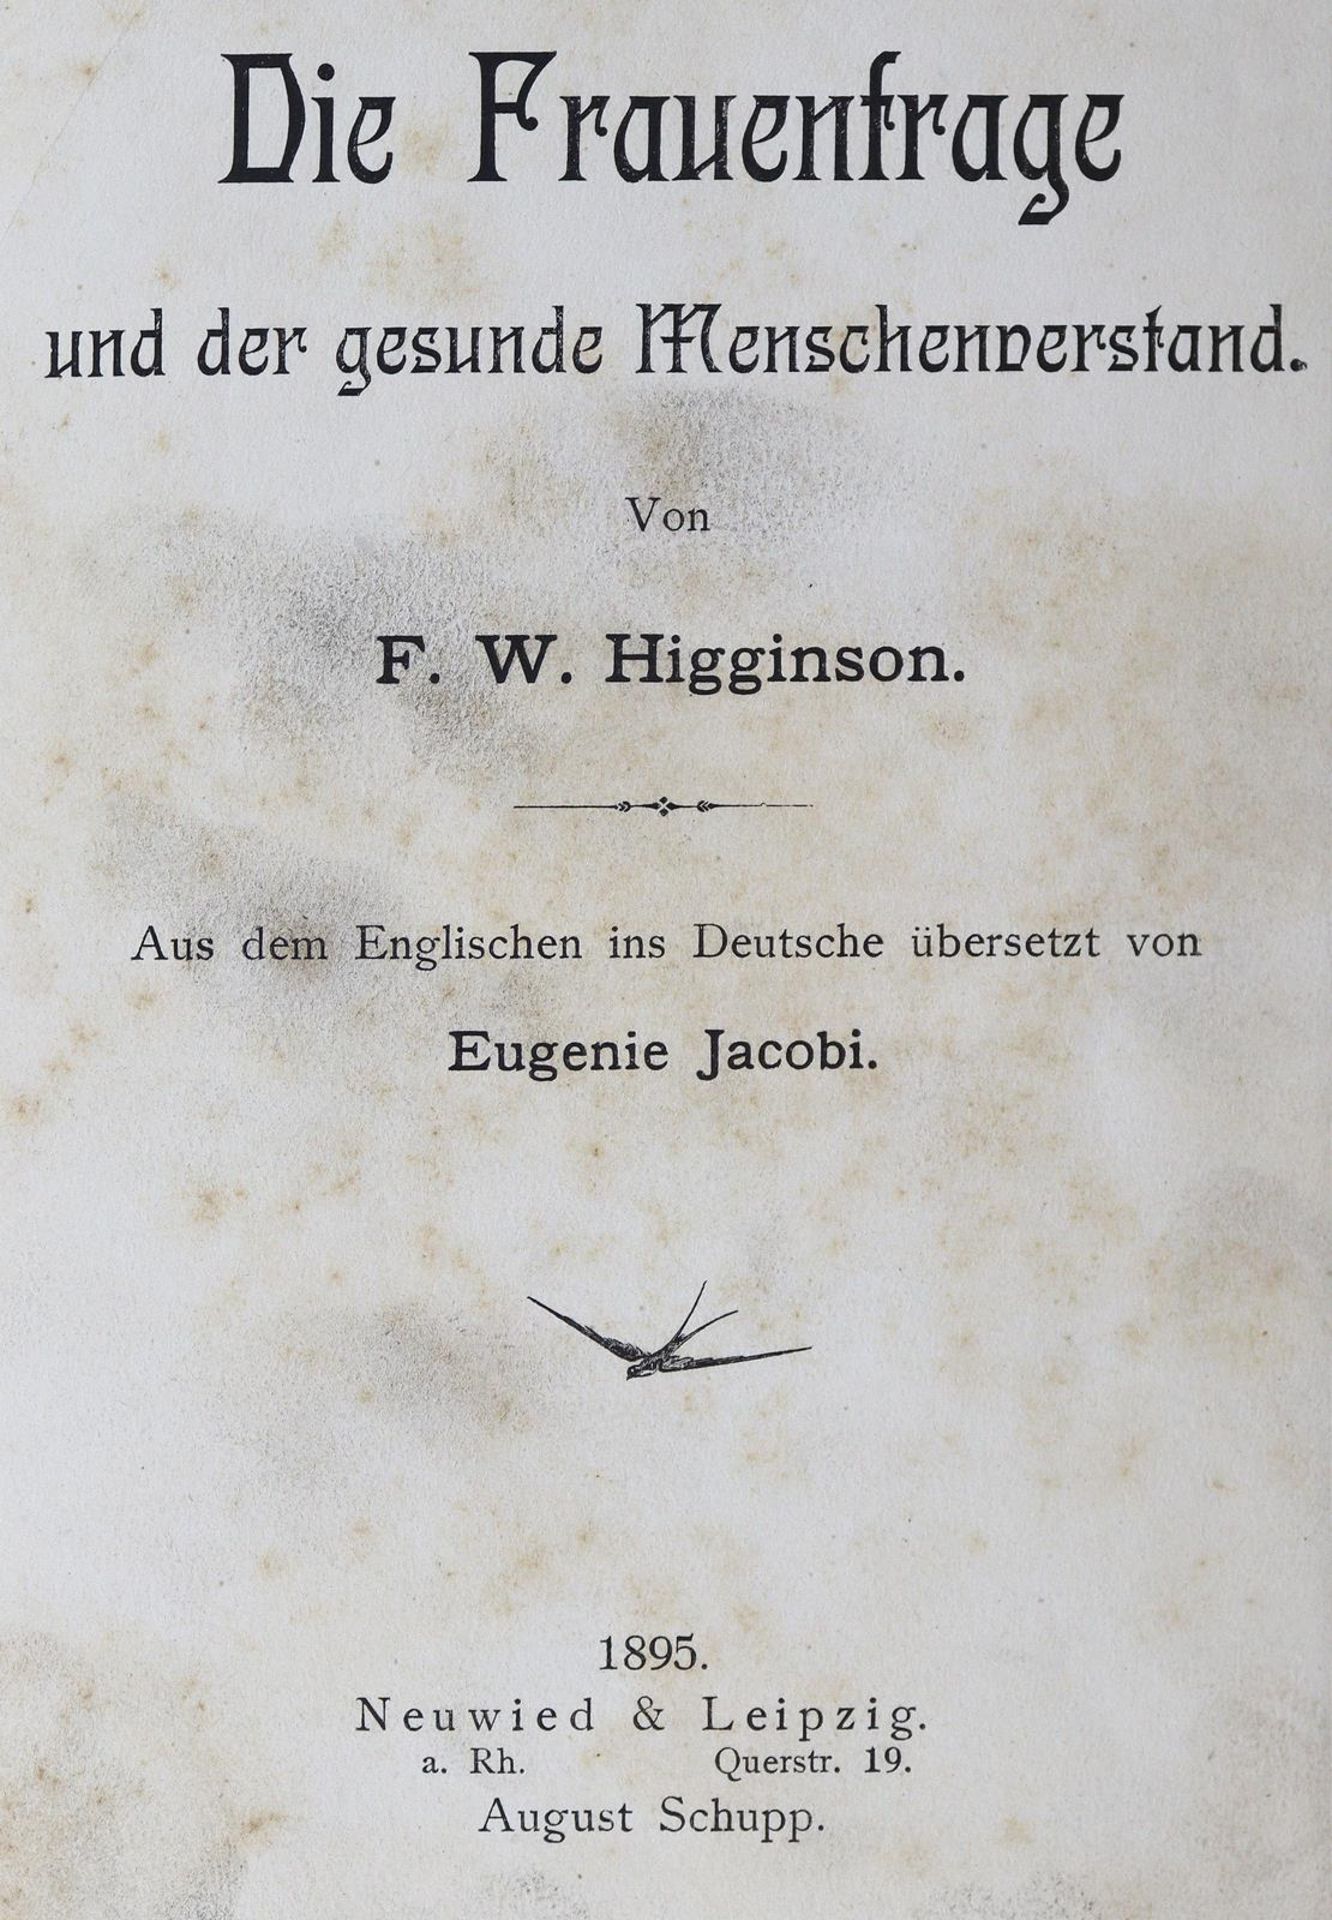 Higginson,F.W. (d.i. T.W.Higginson).